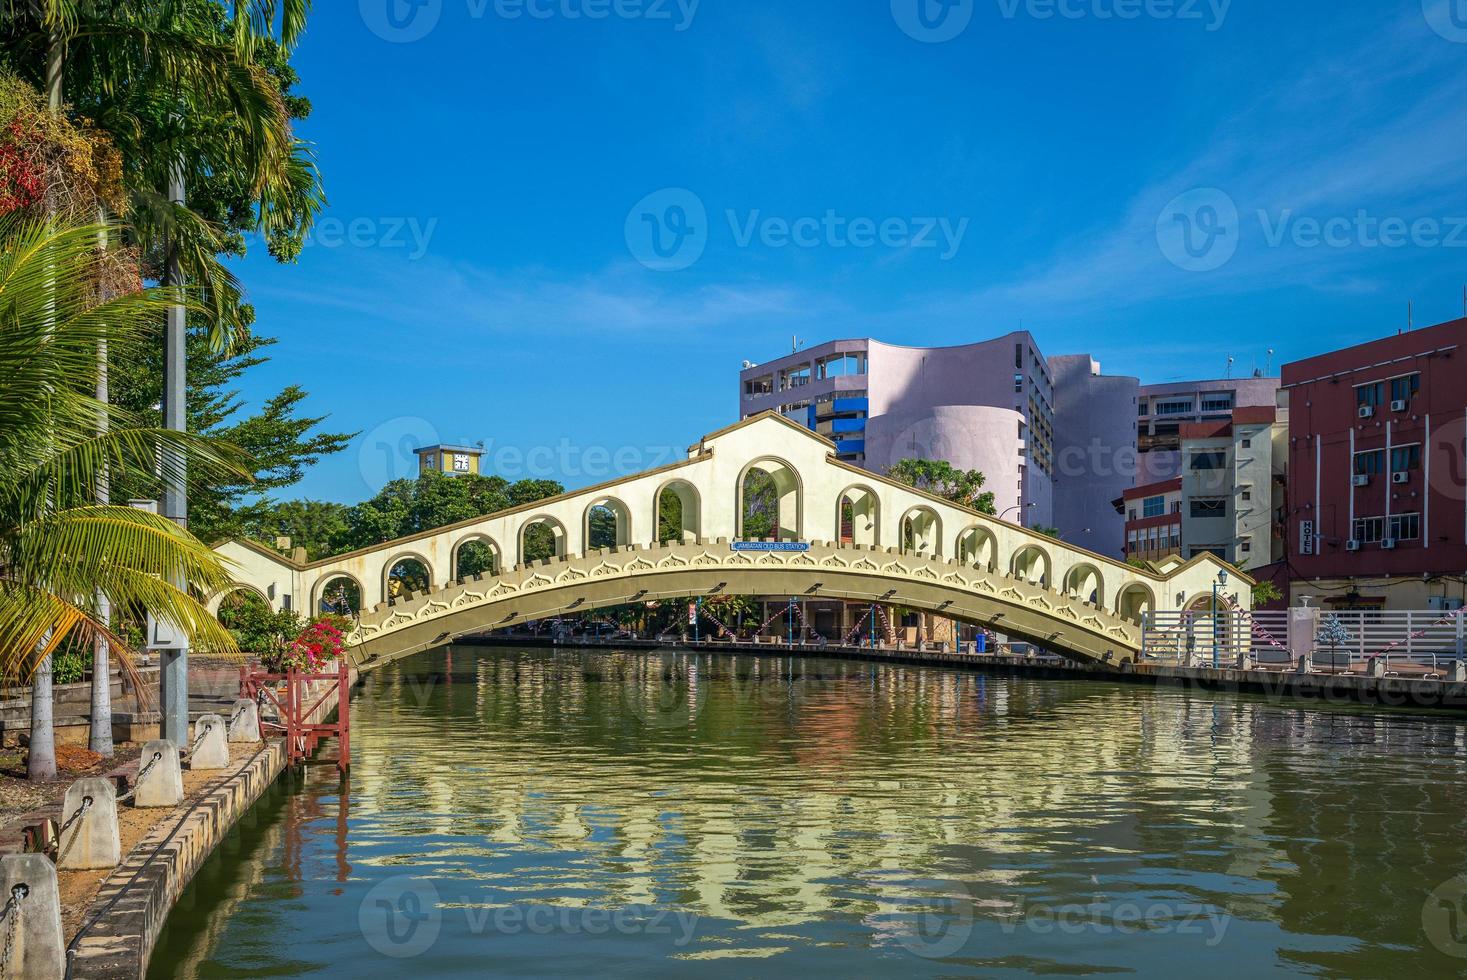 historisk båge bro vid jambatan busstation, melaka, malaysia foto